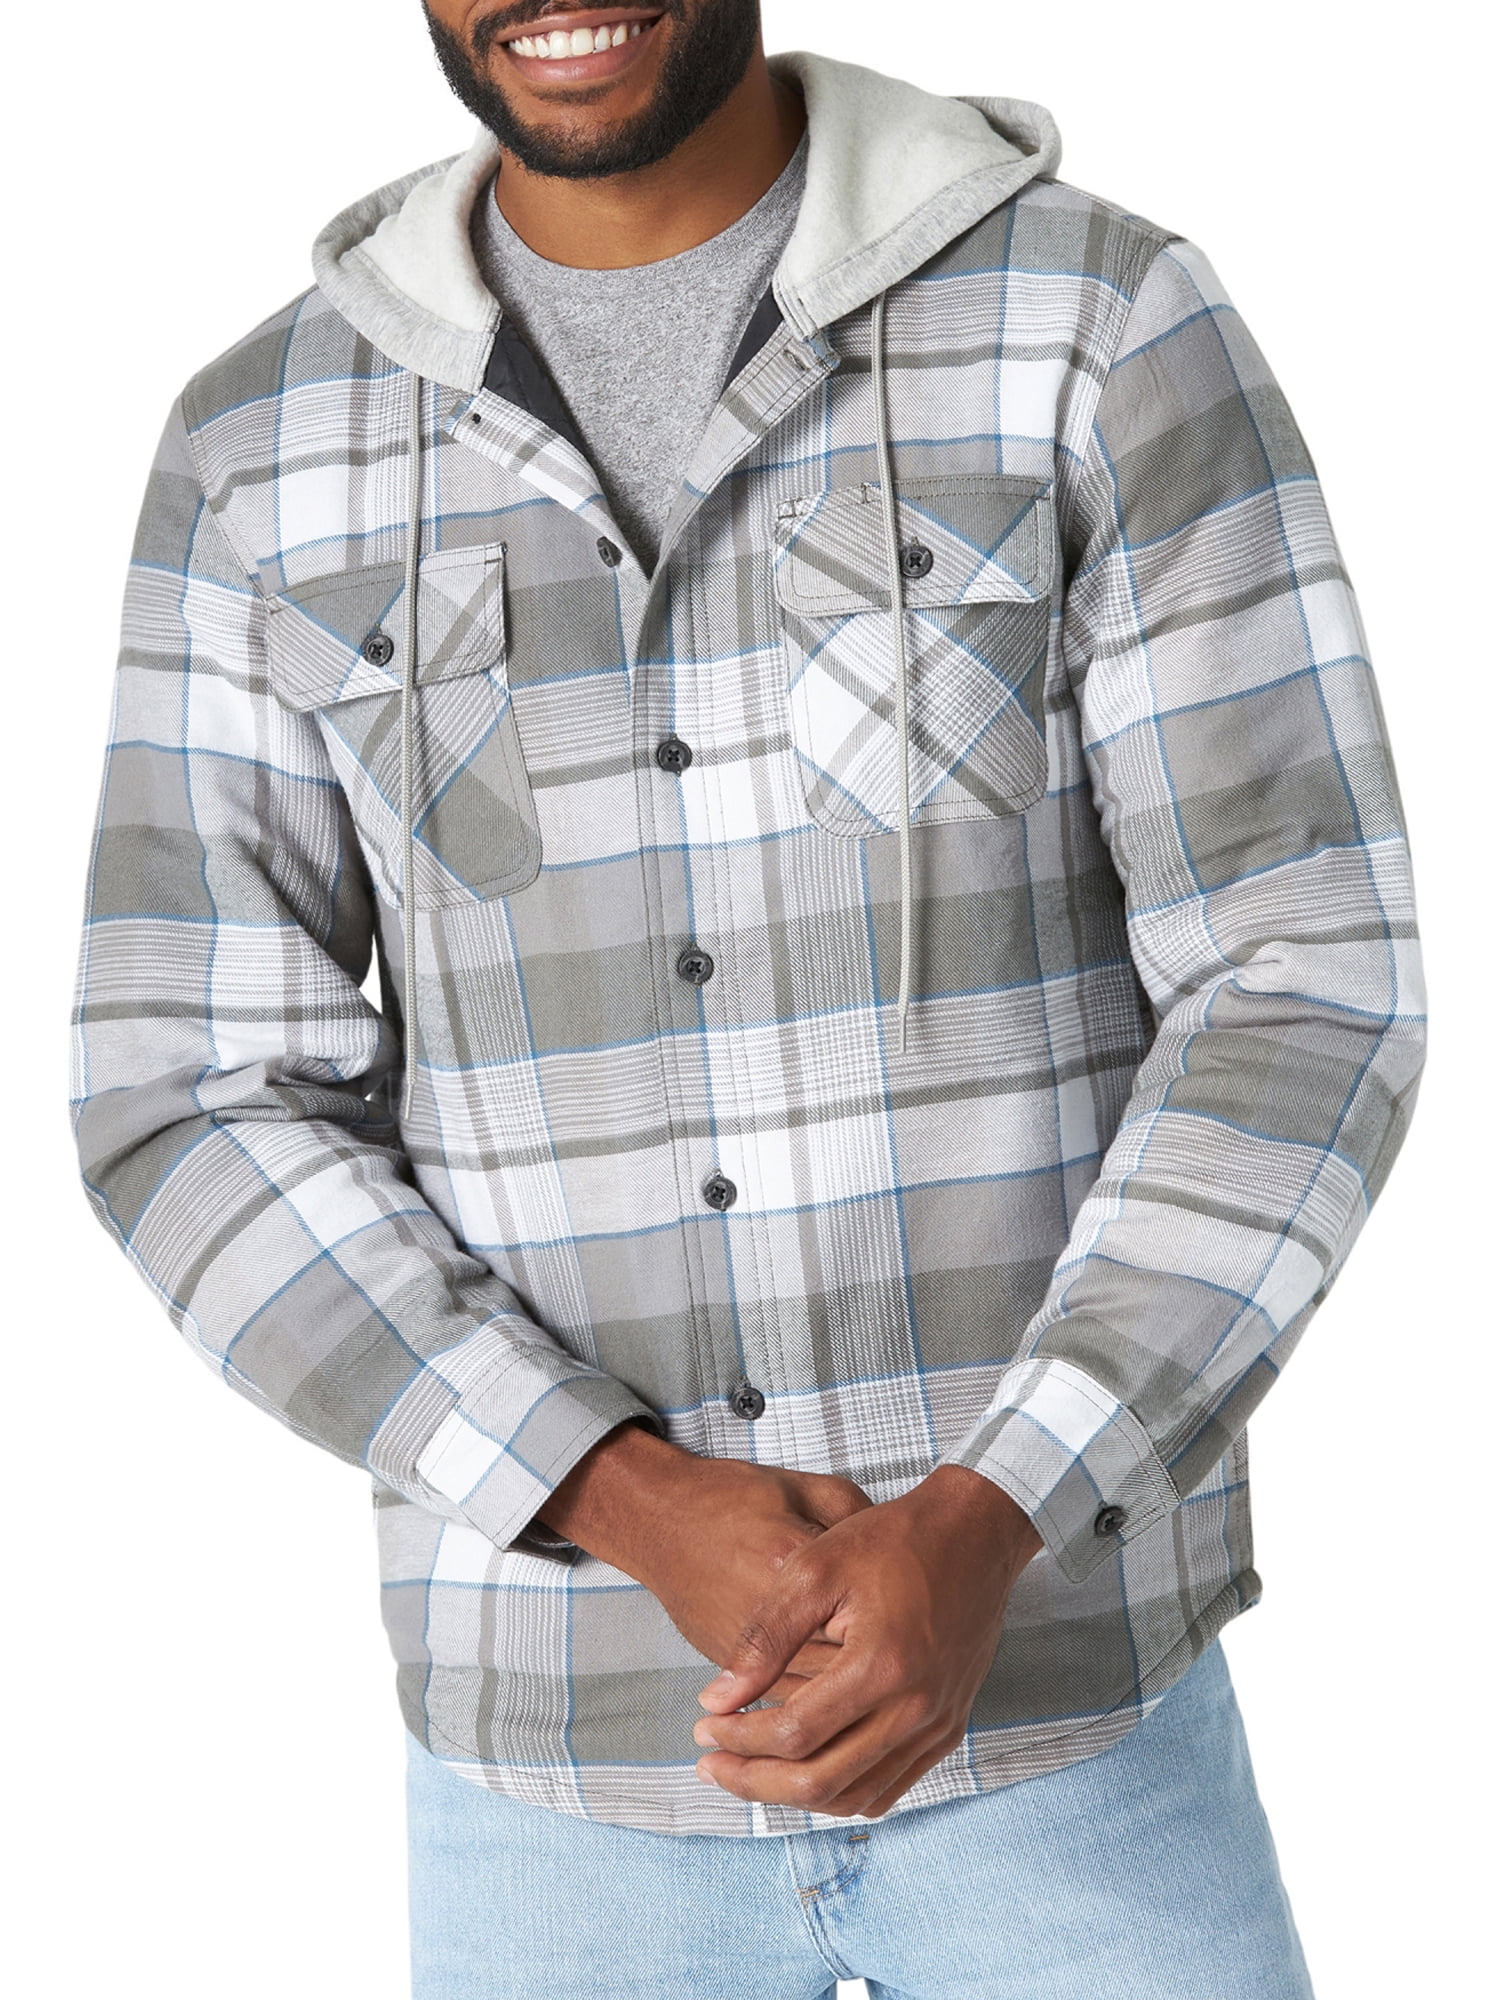 Wrangler Men's Quilted Lined Shirt Jacket 